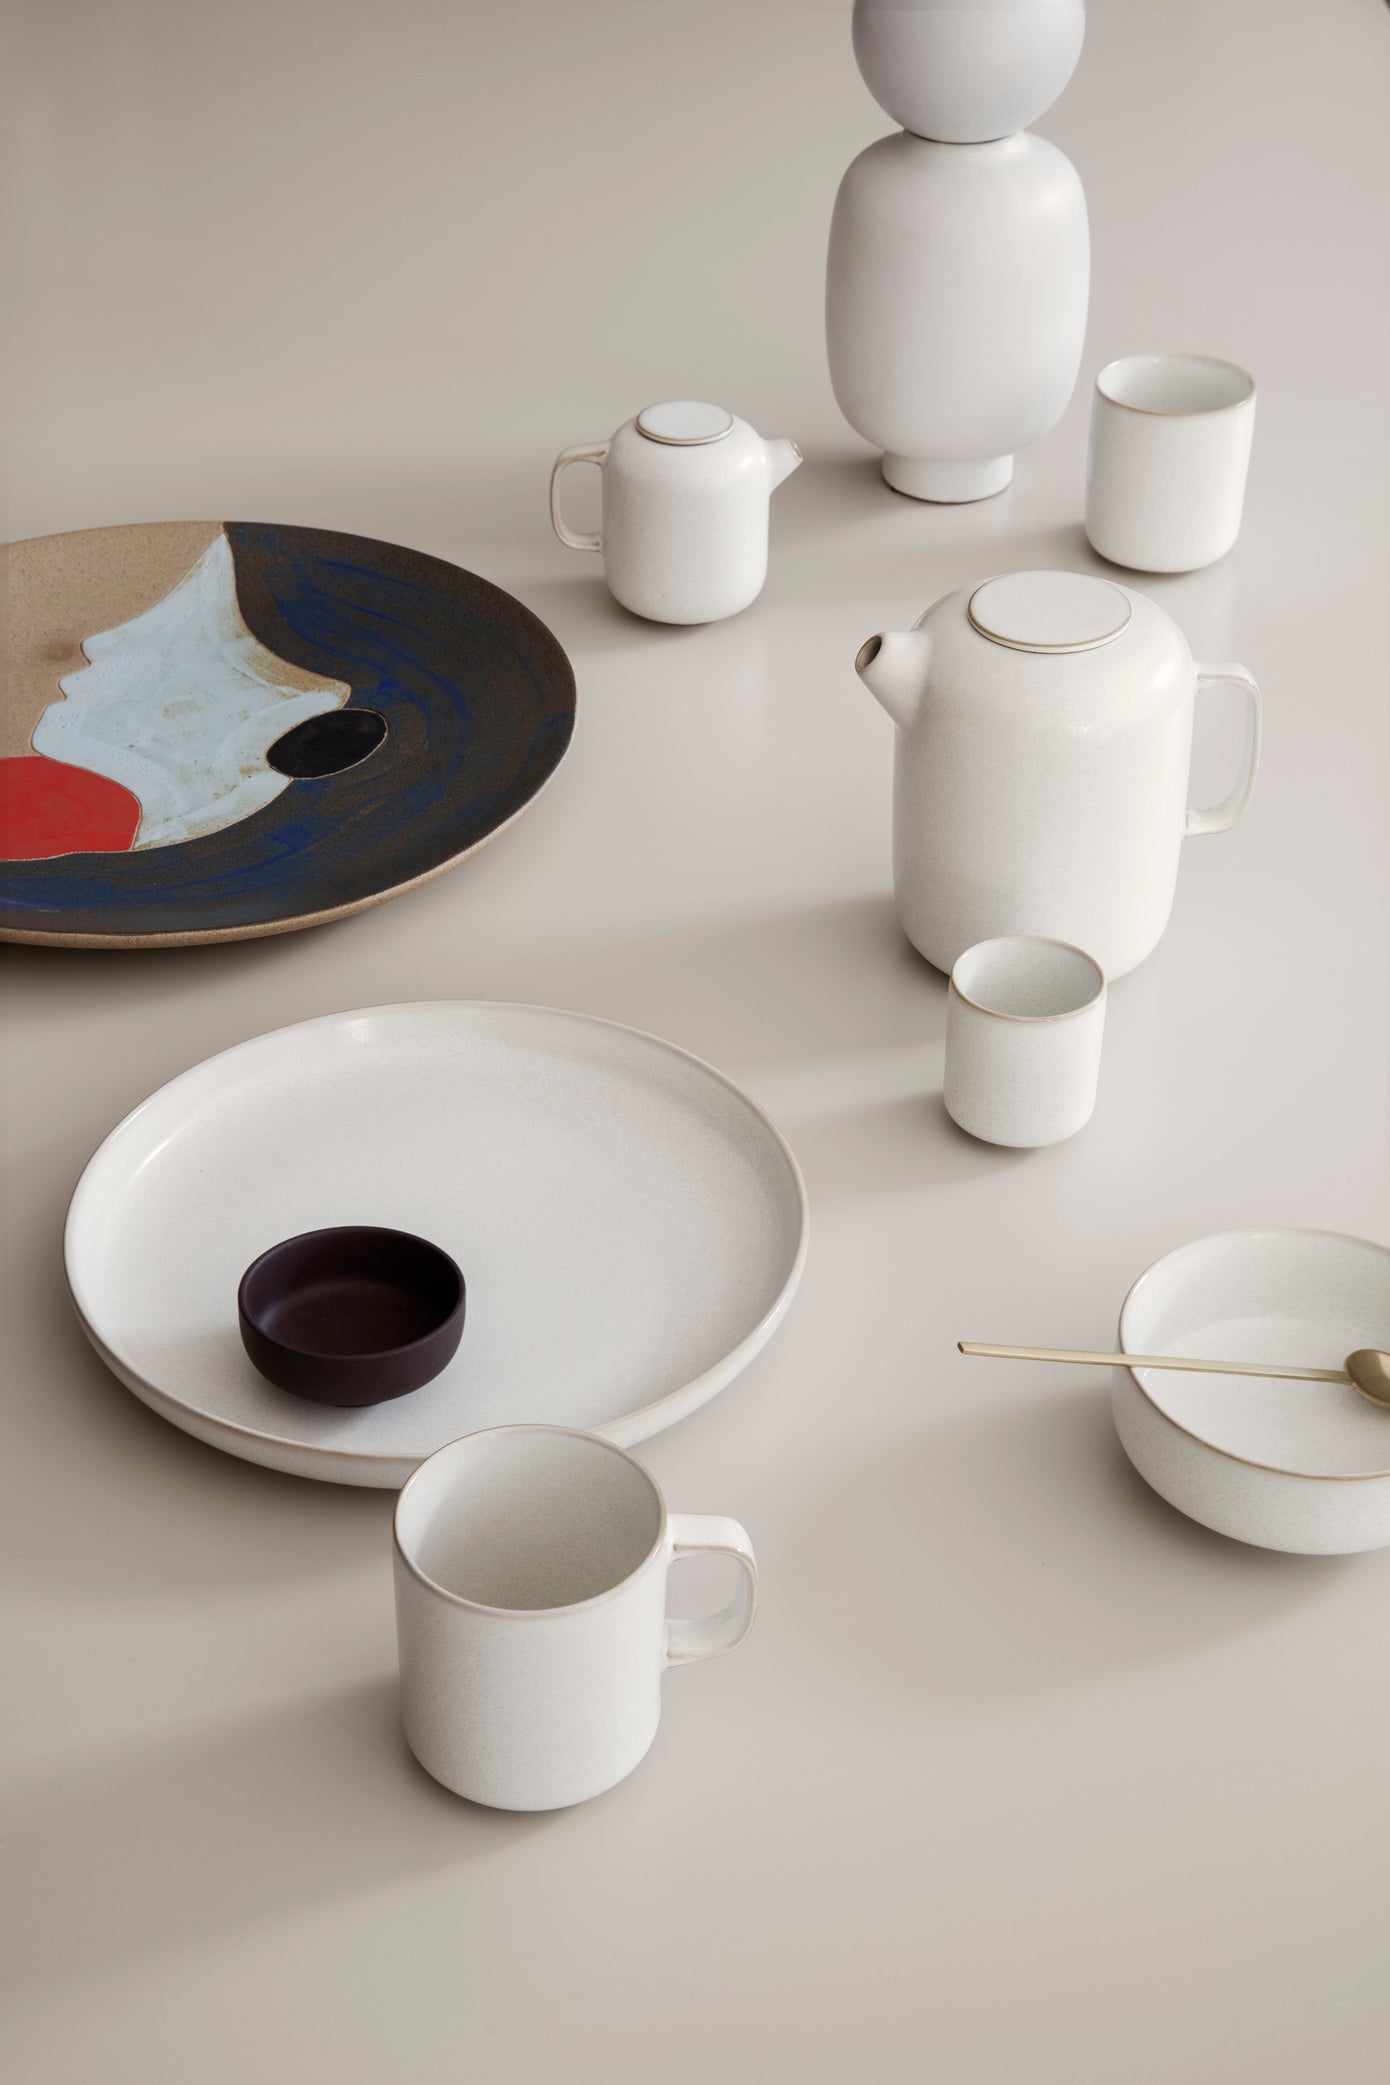 Sekki Dinner Plate | 25.5cm | Cream | Ceramic | by ferm Living - Lifestory